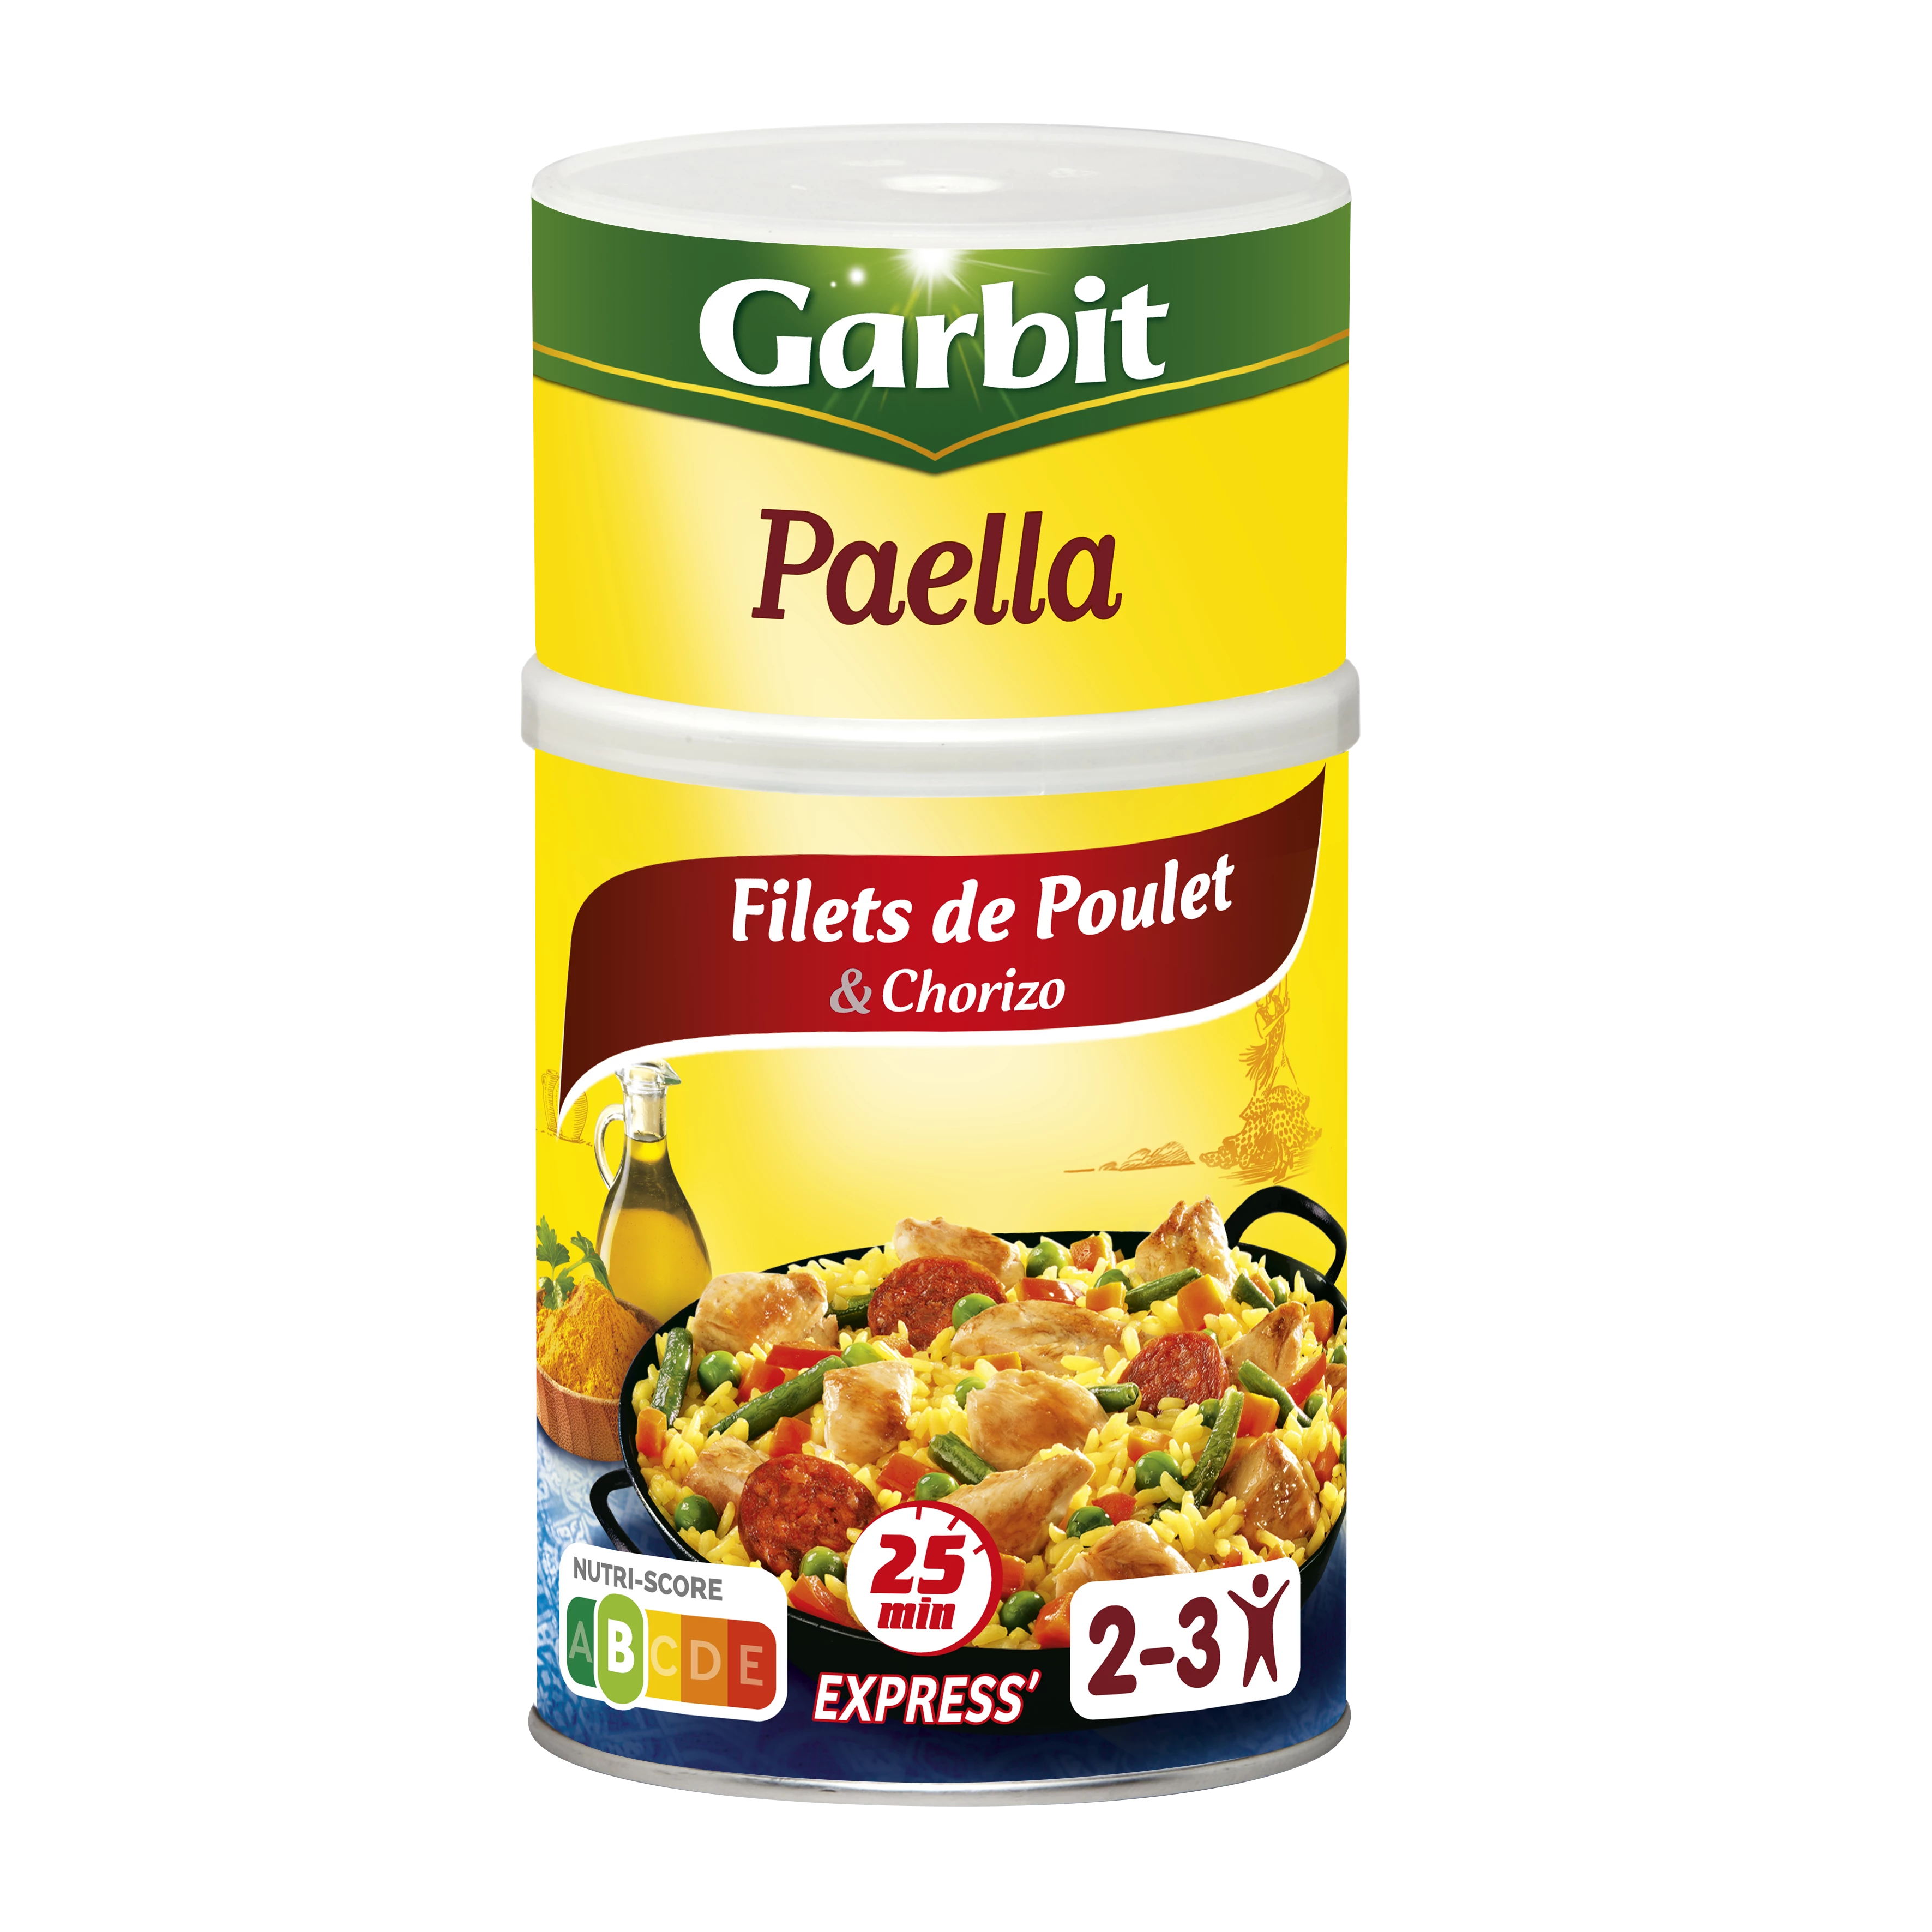 PaelLa Express Chicken Fillet and Chorizo, 960g - GARBIT